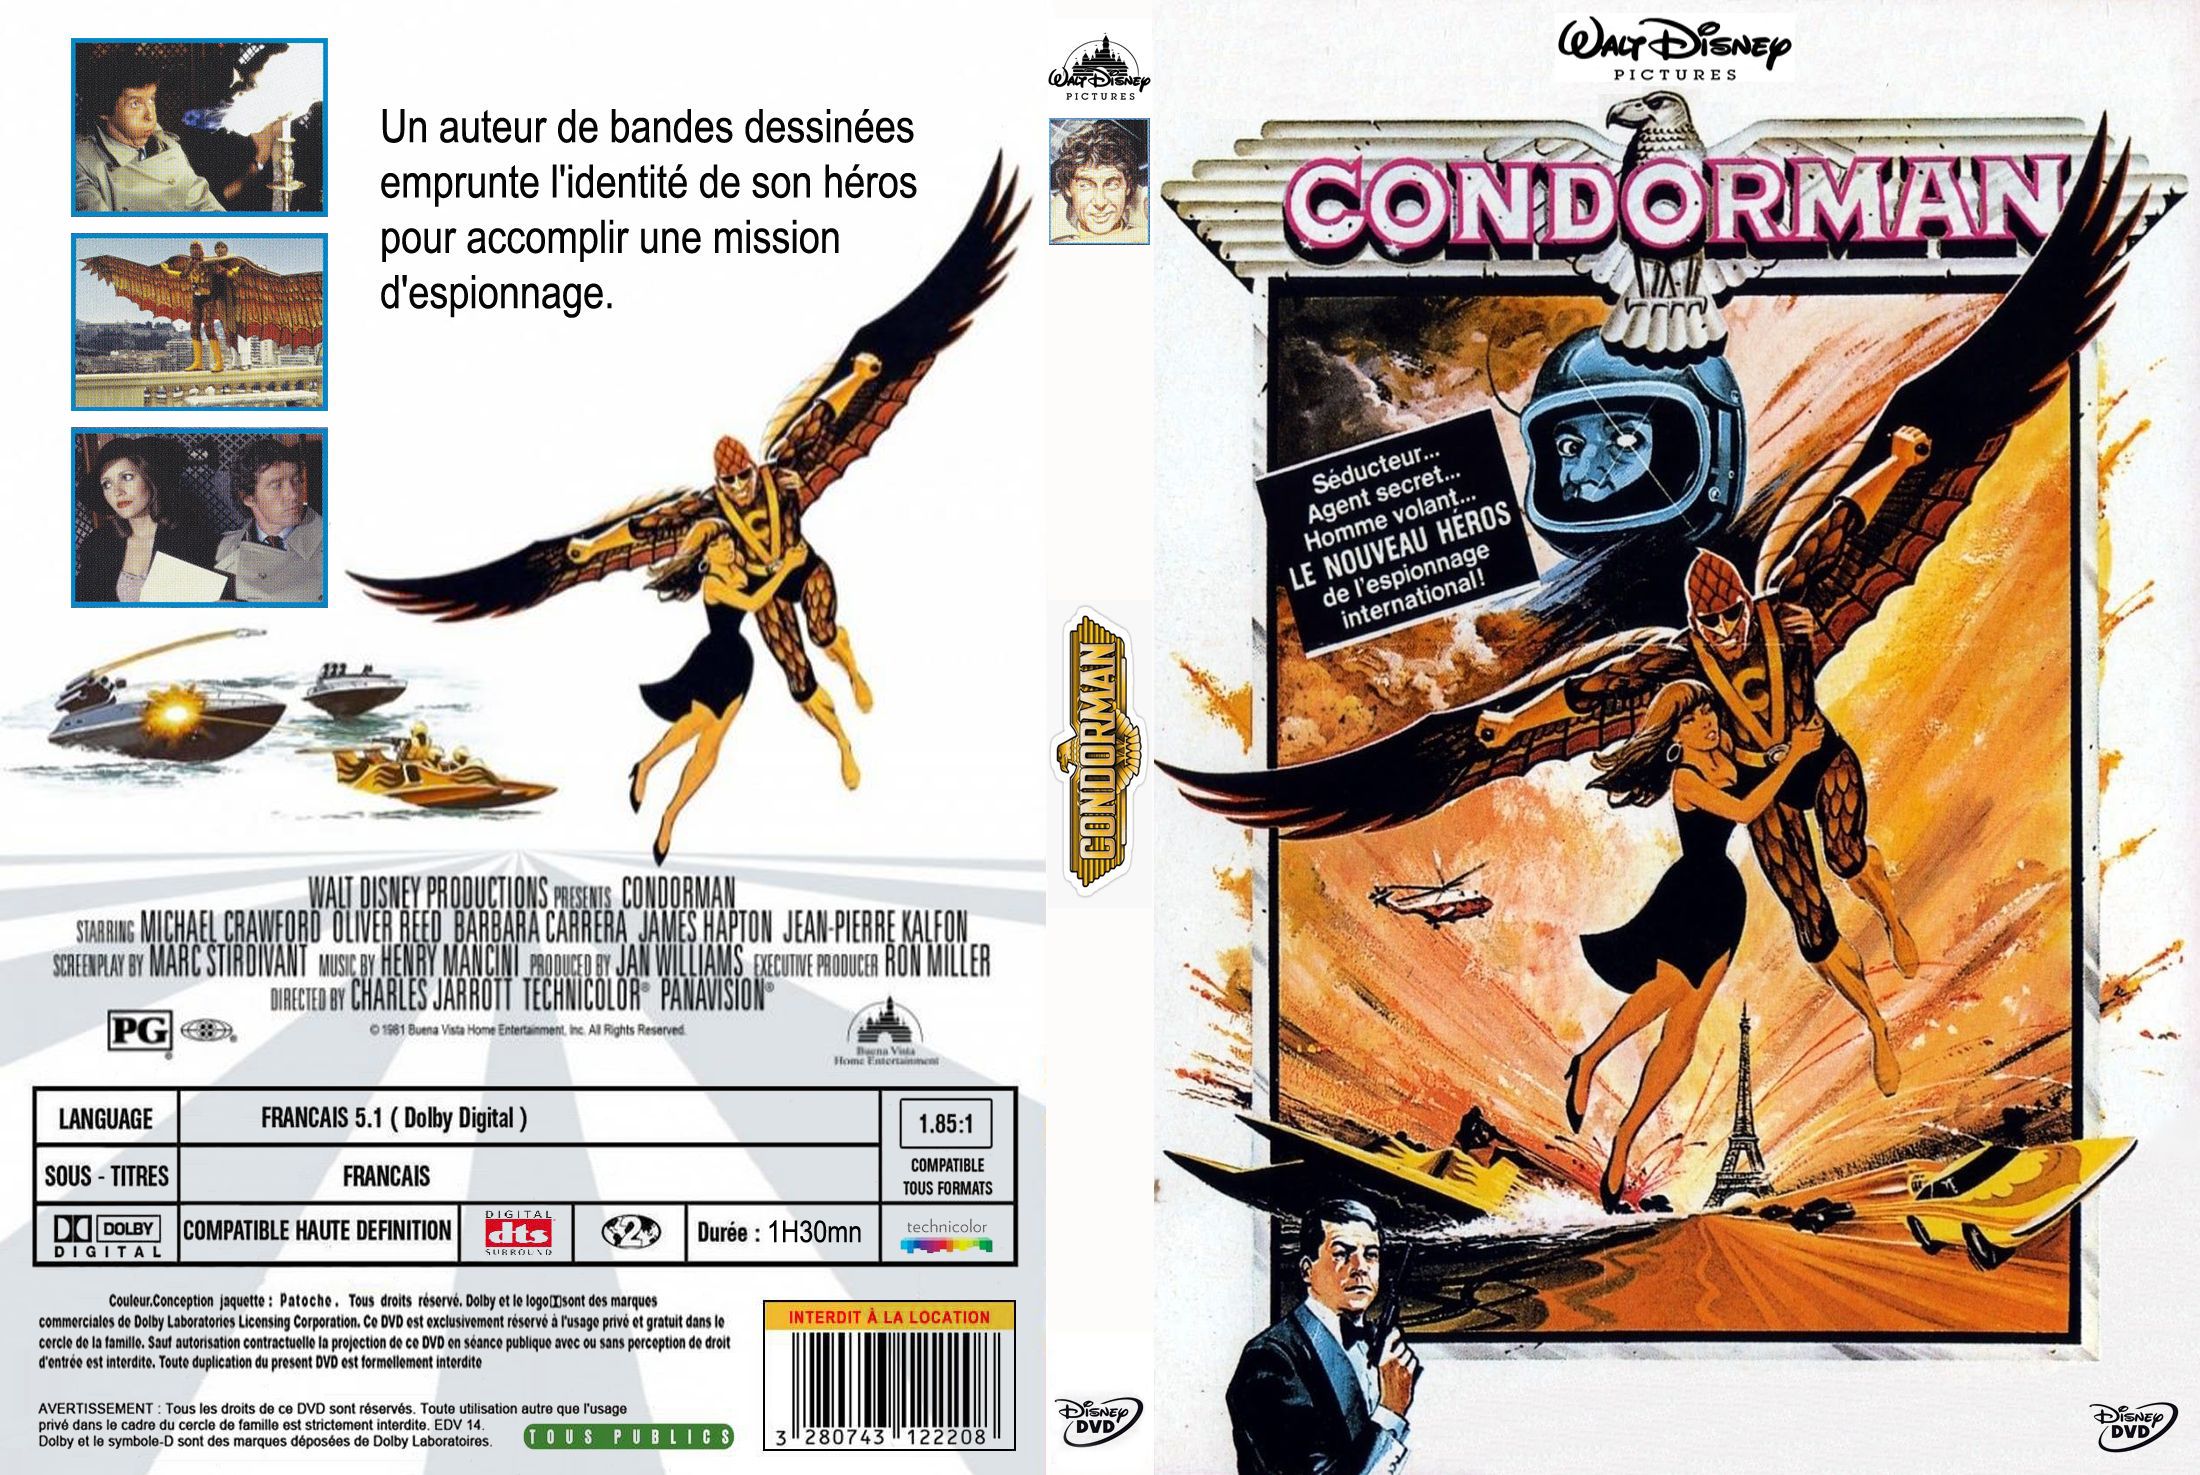 Jaquette DVD Condorman custom